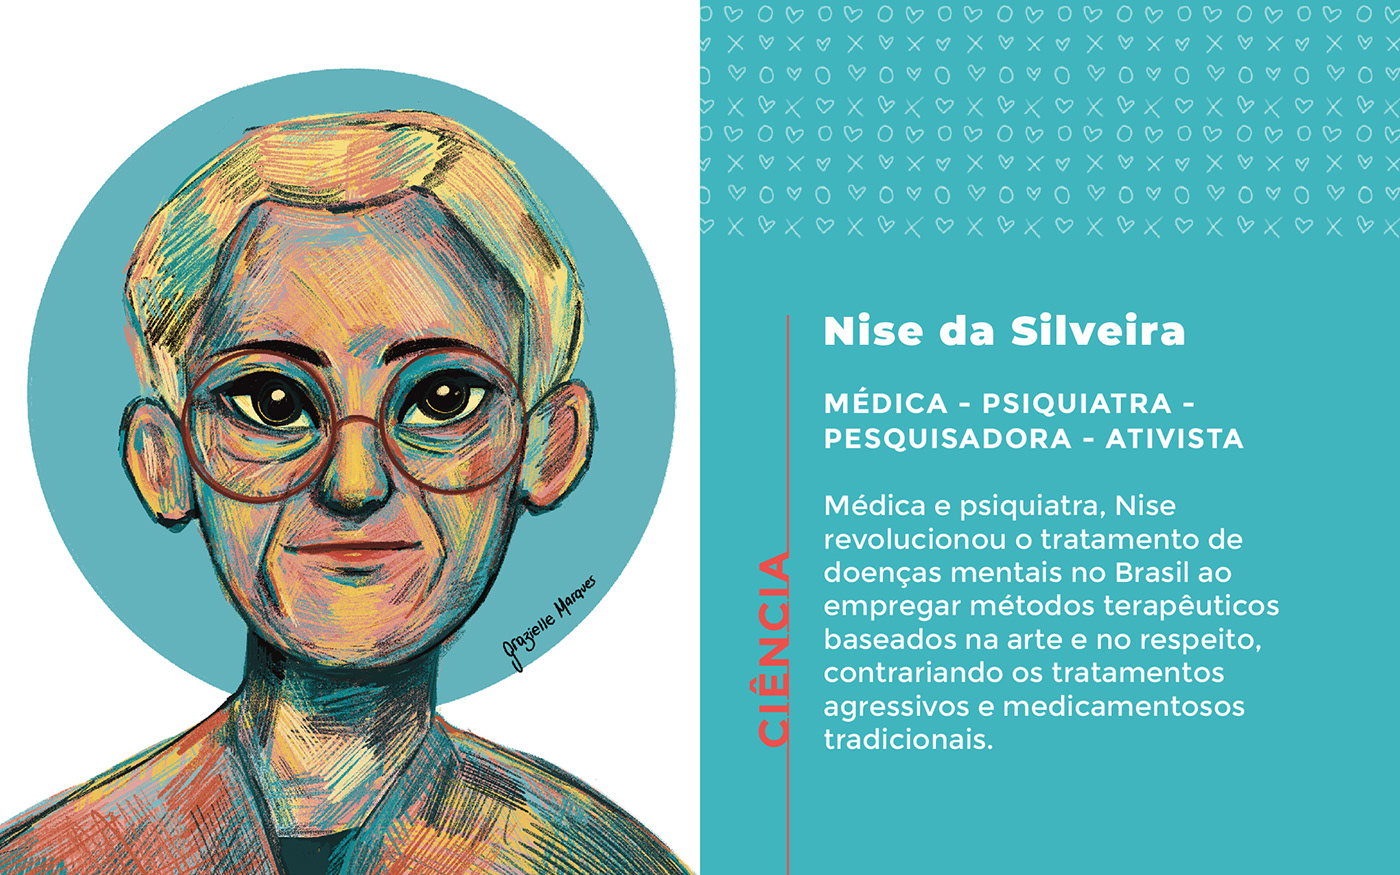 An illustrated portrait of Nise da Silveira, famous brazilian psychiatrist.